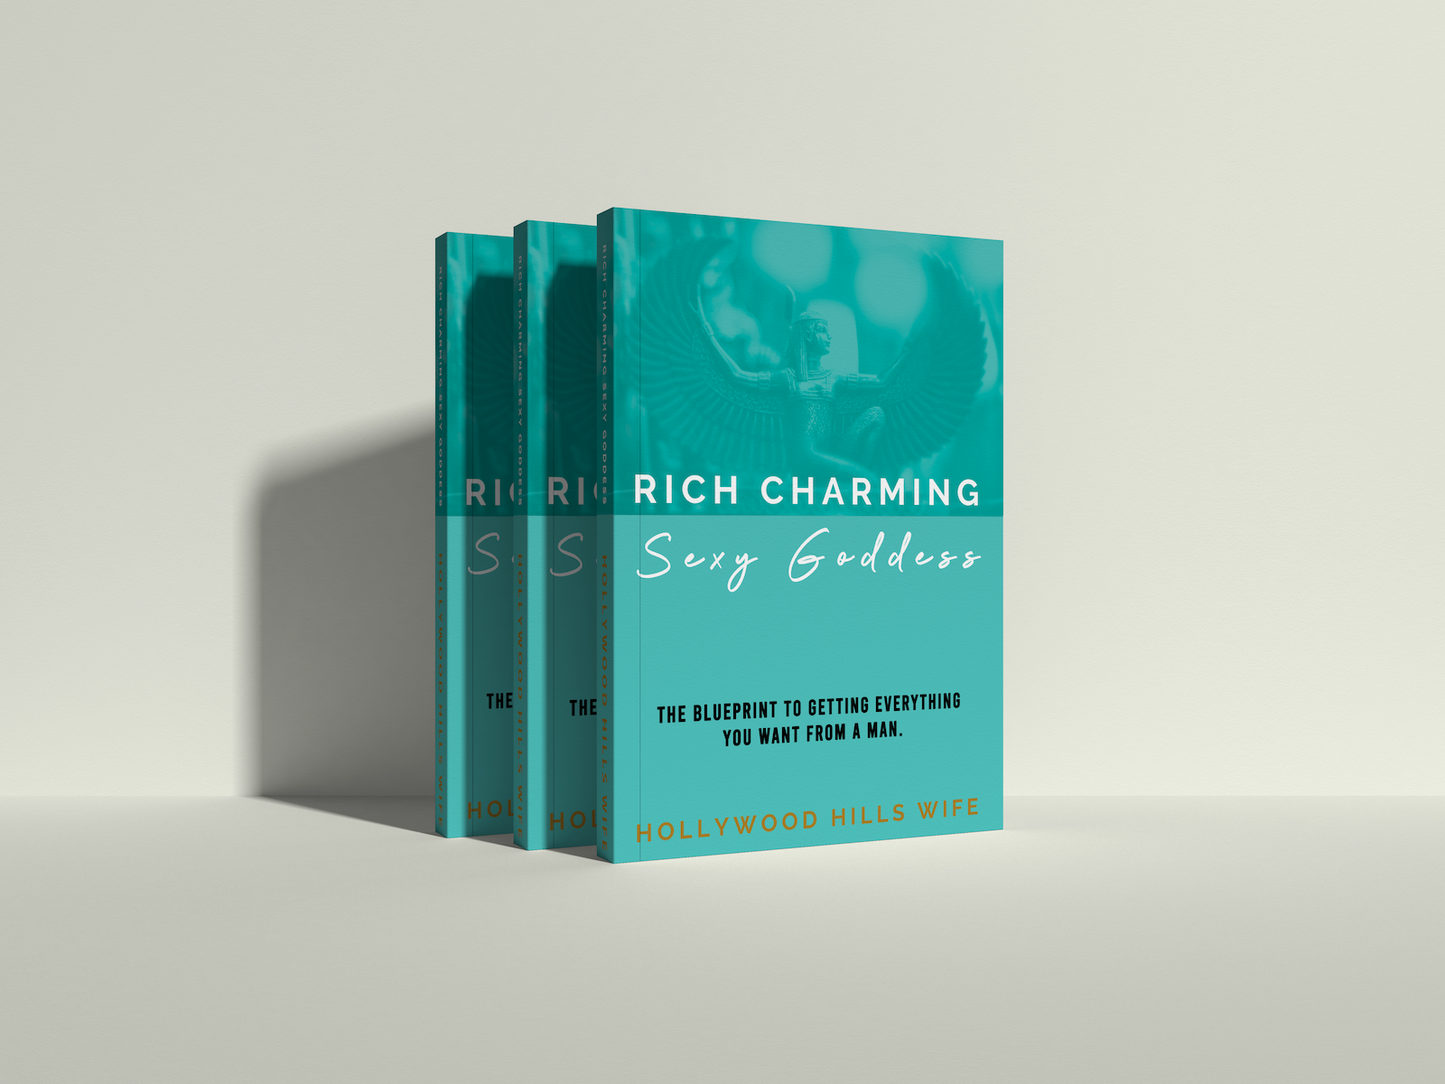 Rich, Charming, Sexy Goddess Book